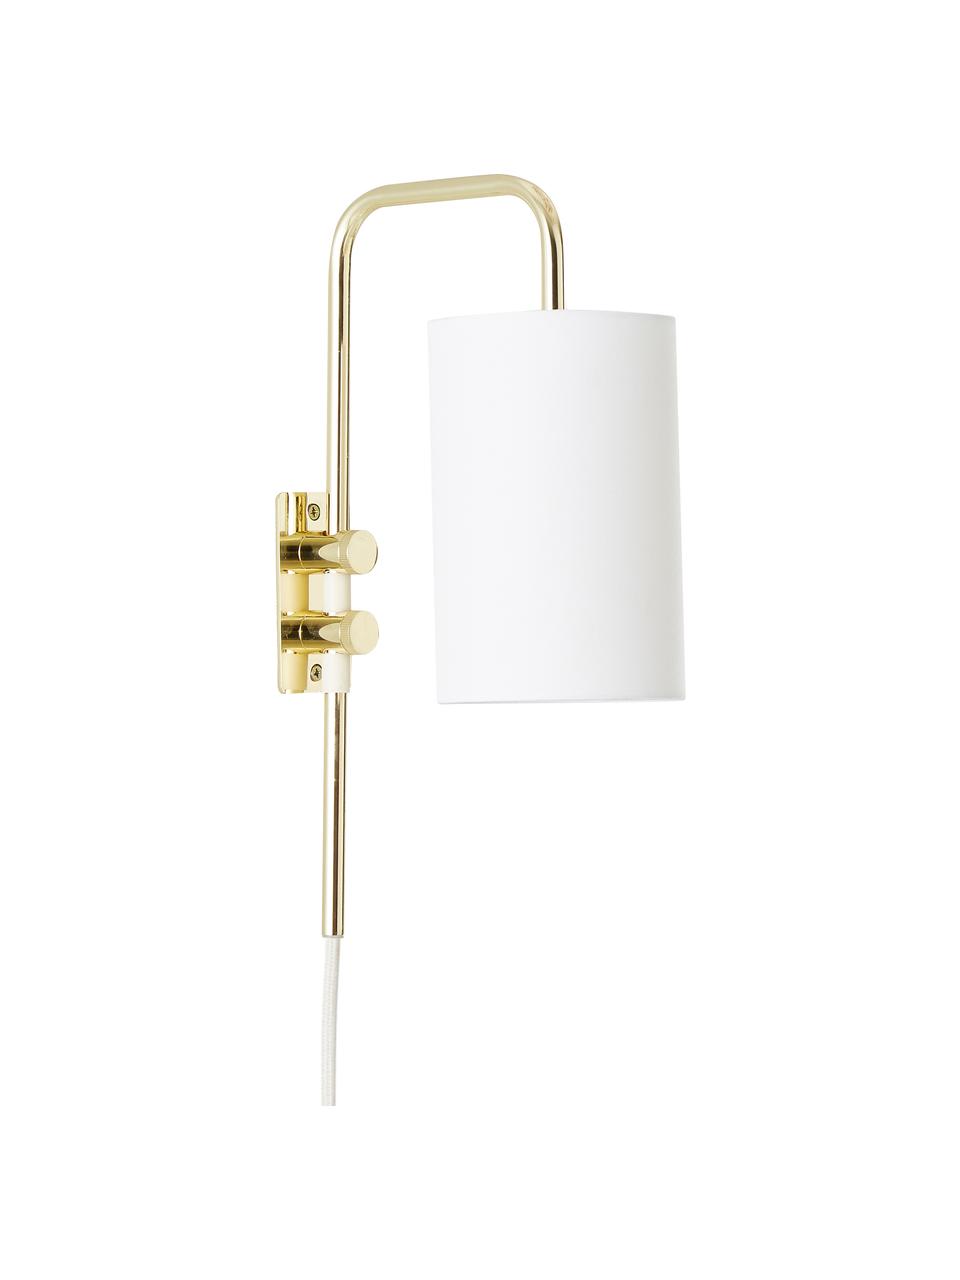 Wandlamp Isa met stekker, Lampenkap: katoenmix, Frame: metaal, Lampframe: glanzend goudkleurig. Lampenkap: wit, D 21 x H 38 cm